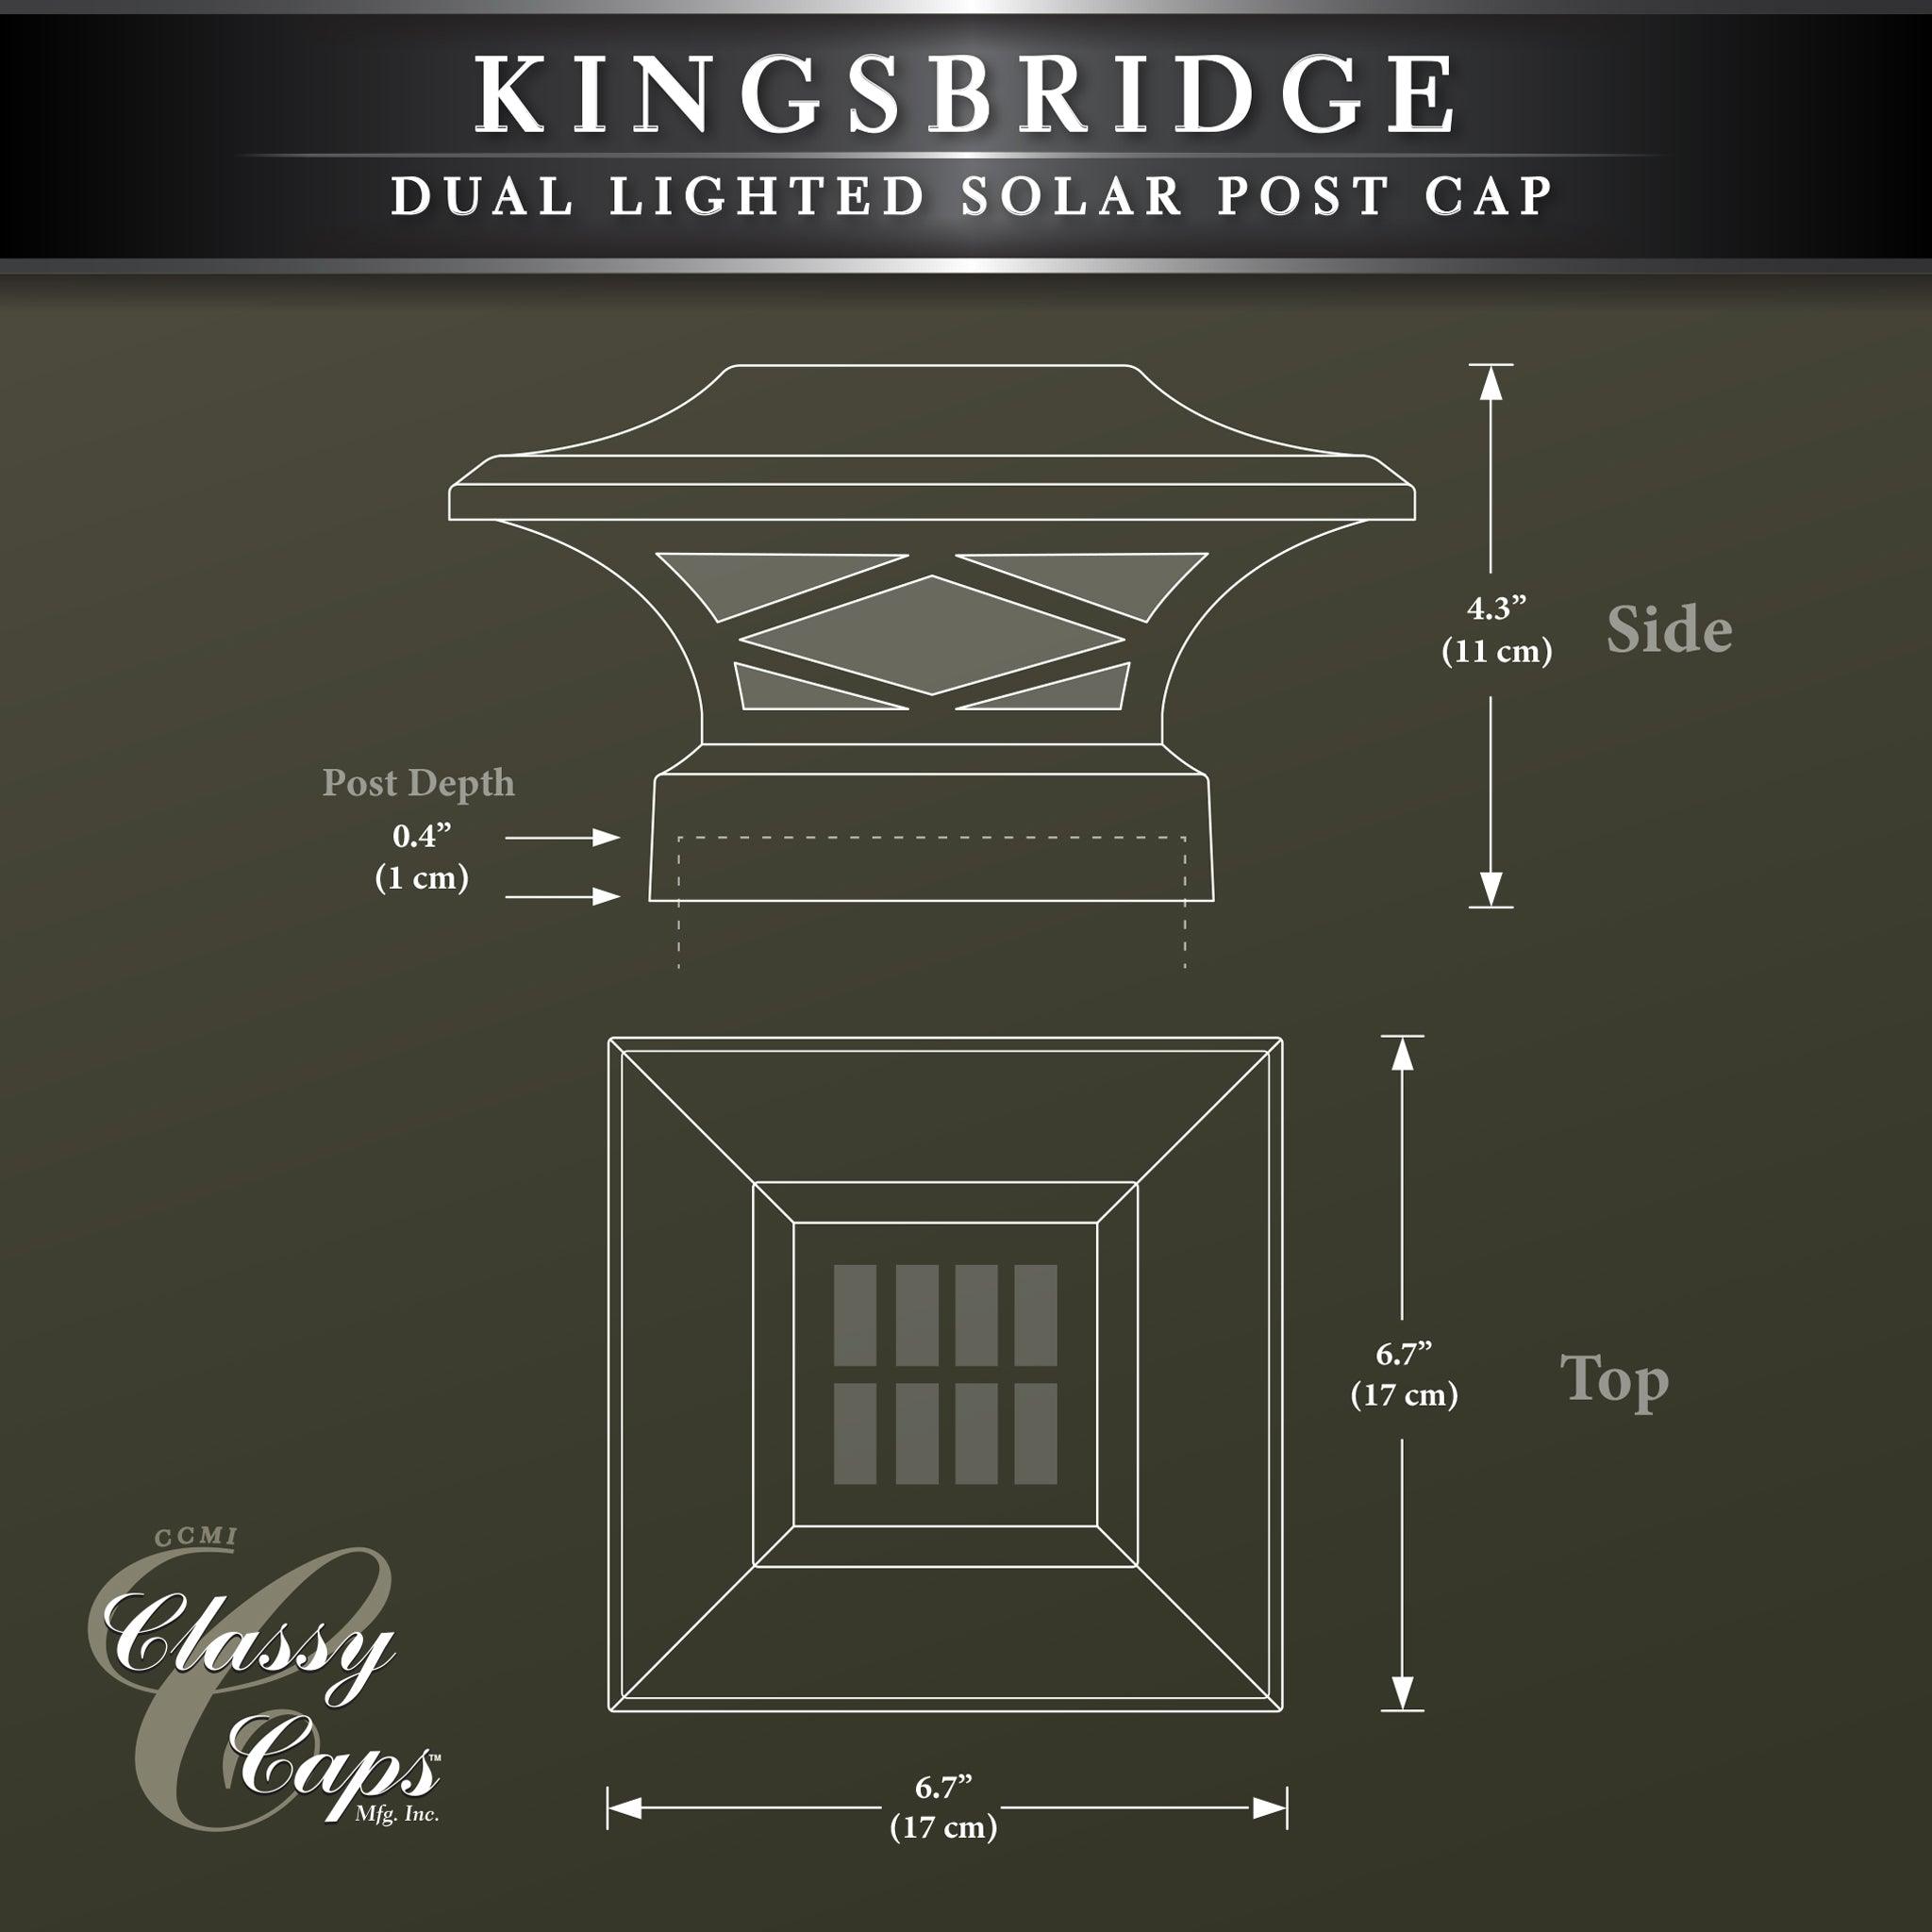 Kingsbridge Dual Lighted Solar Post Cap - Black - Classy Caps Mfg. Inc.